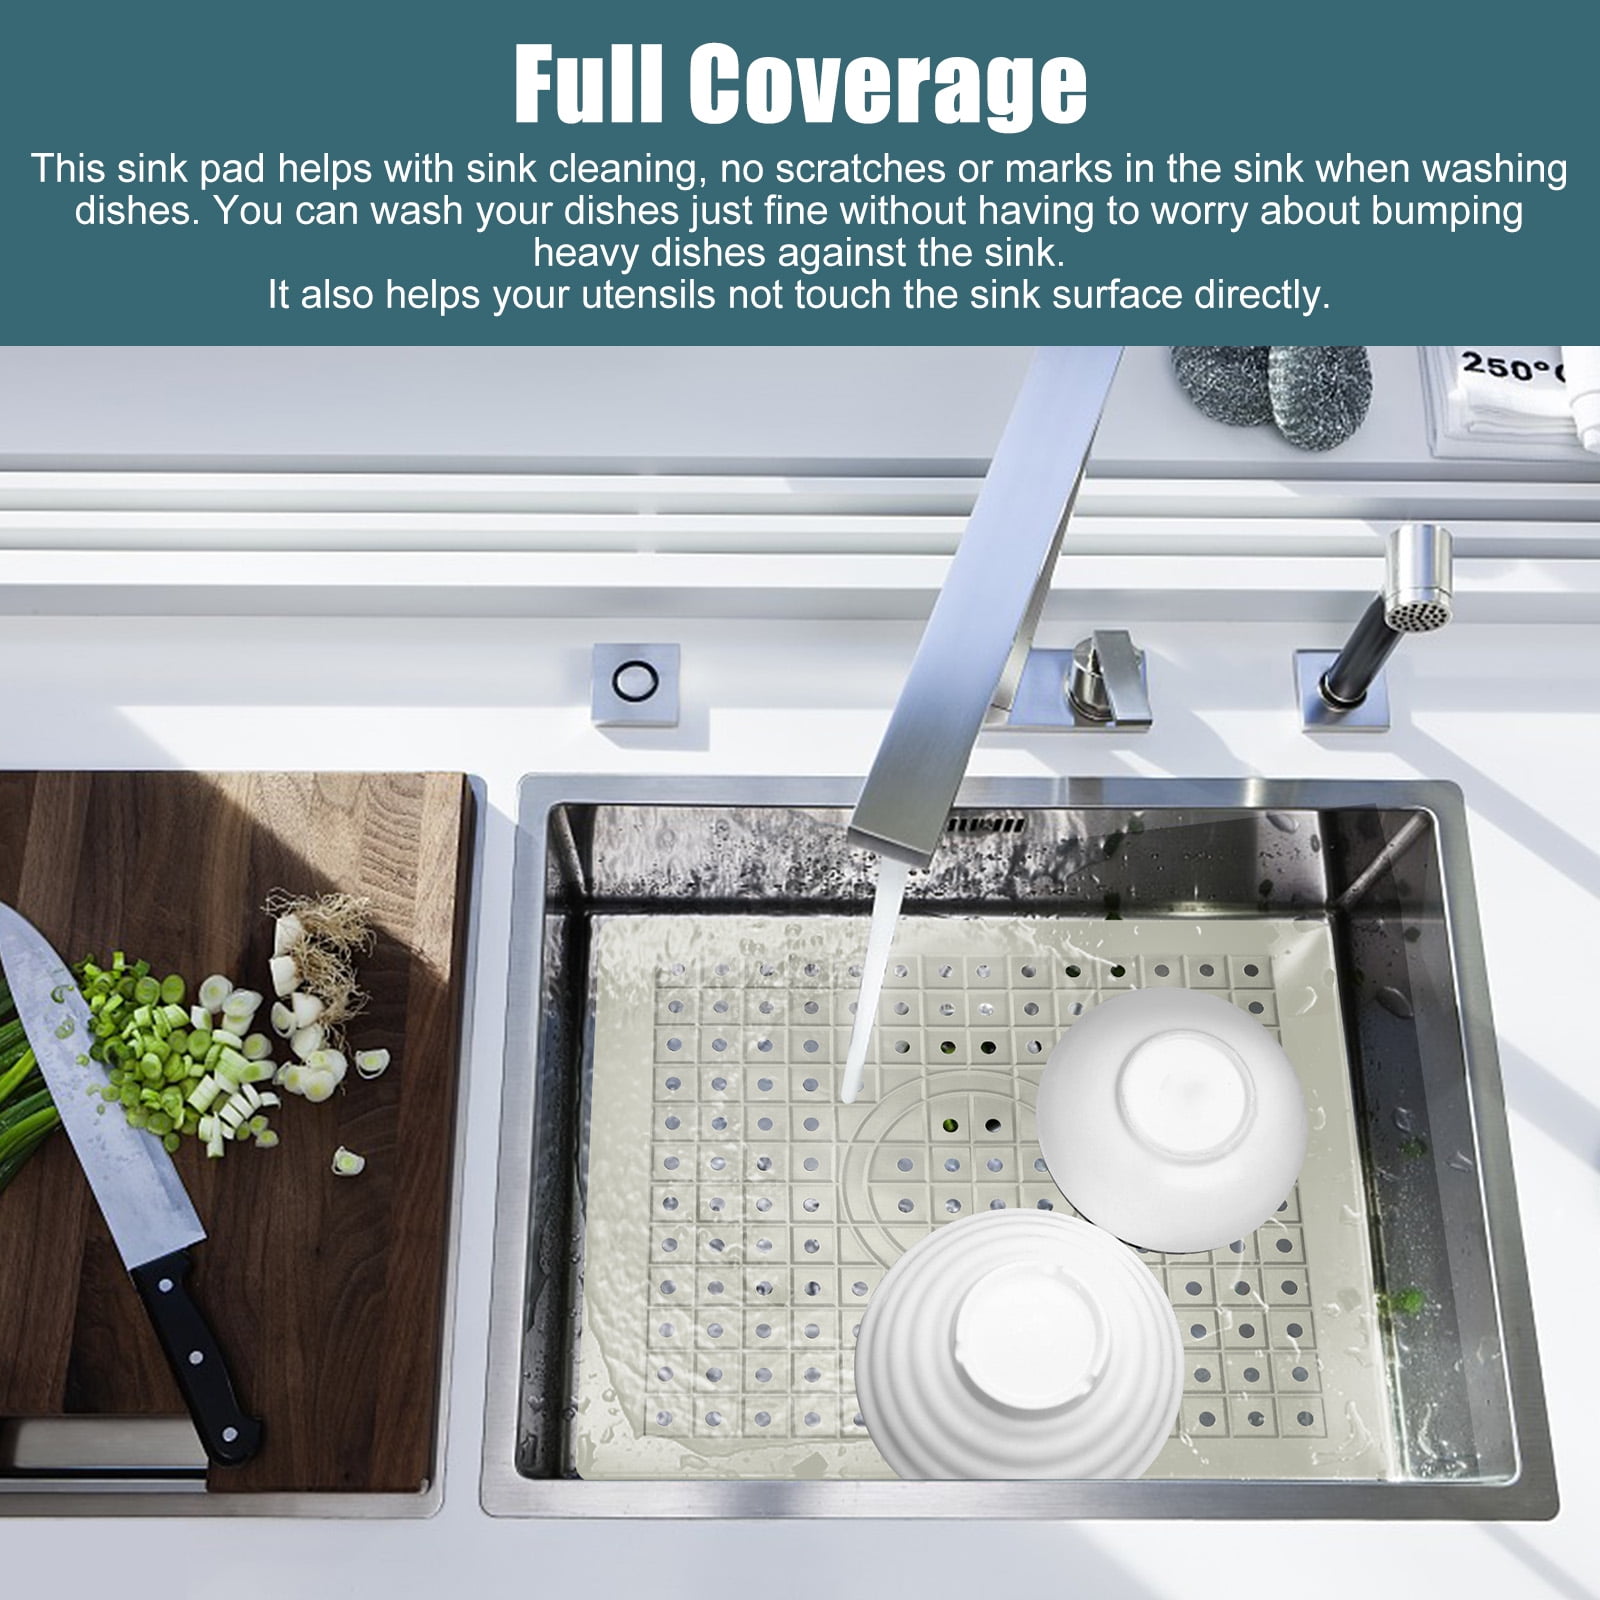 Kitchen Silicone Sink Protector, LONGRV 2 PCS Folding Anti-Slip